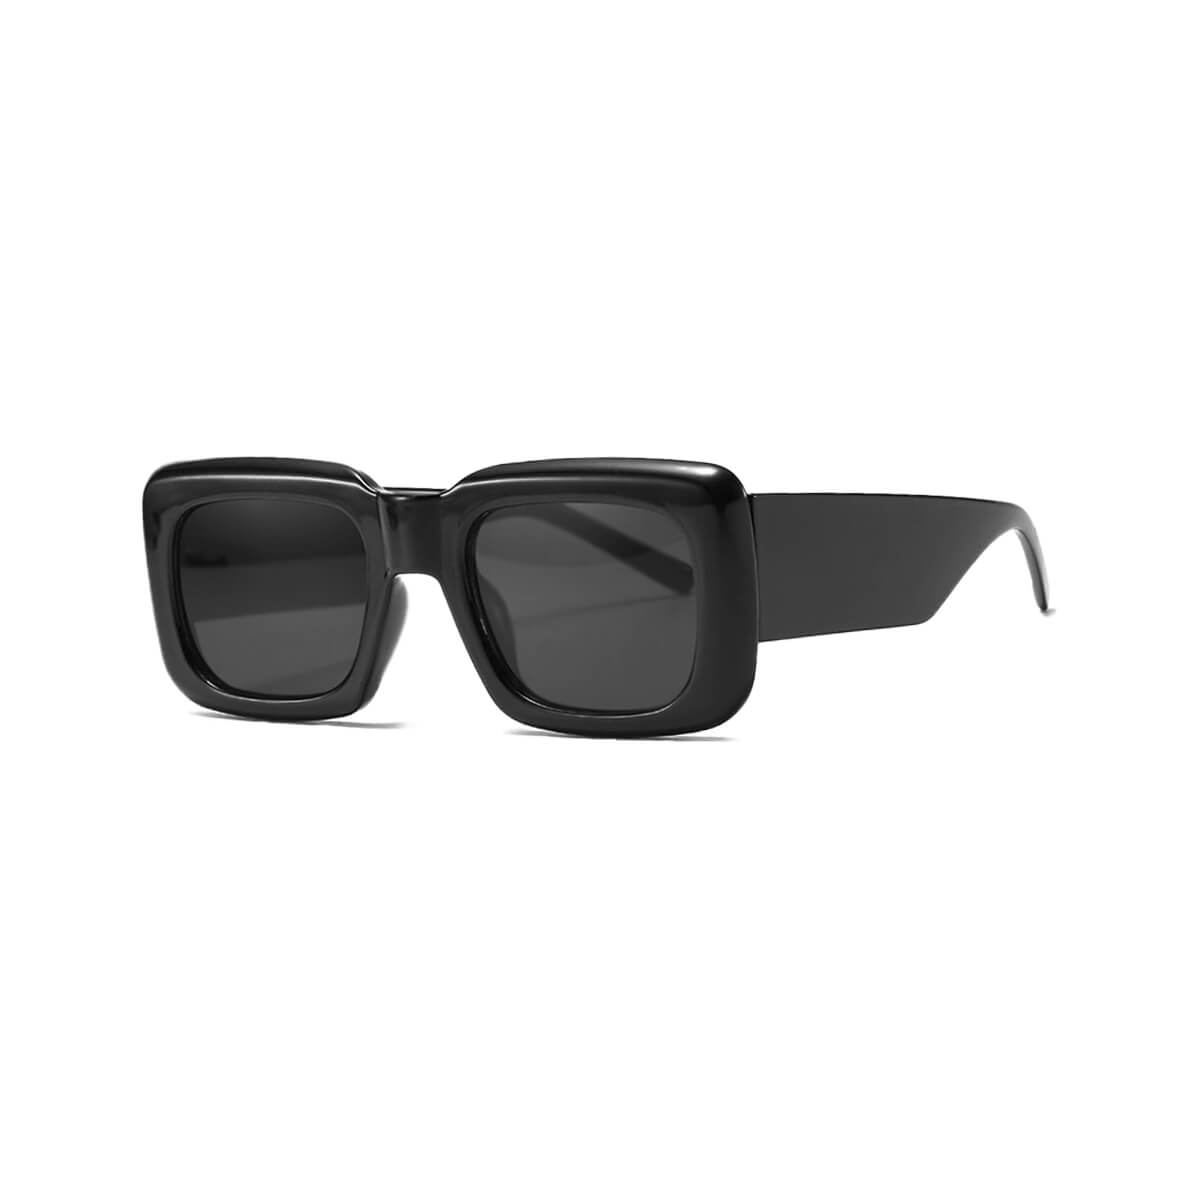 Oversized Black Frame and Lens Sunglasses Front